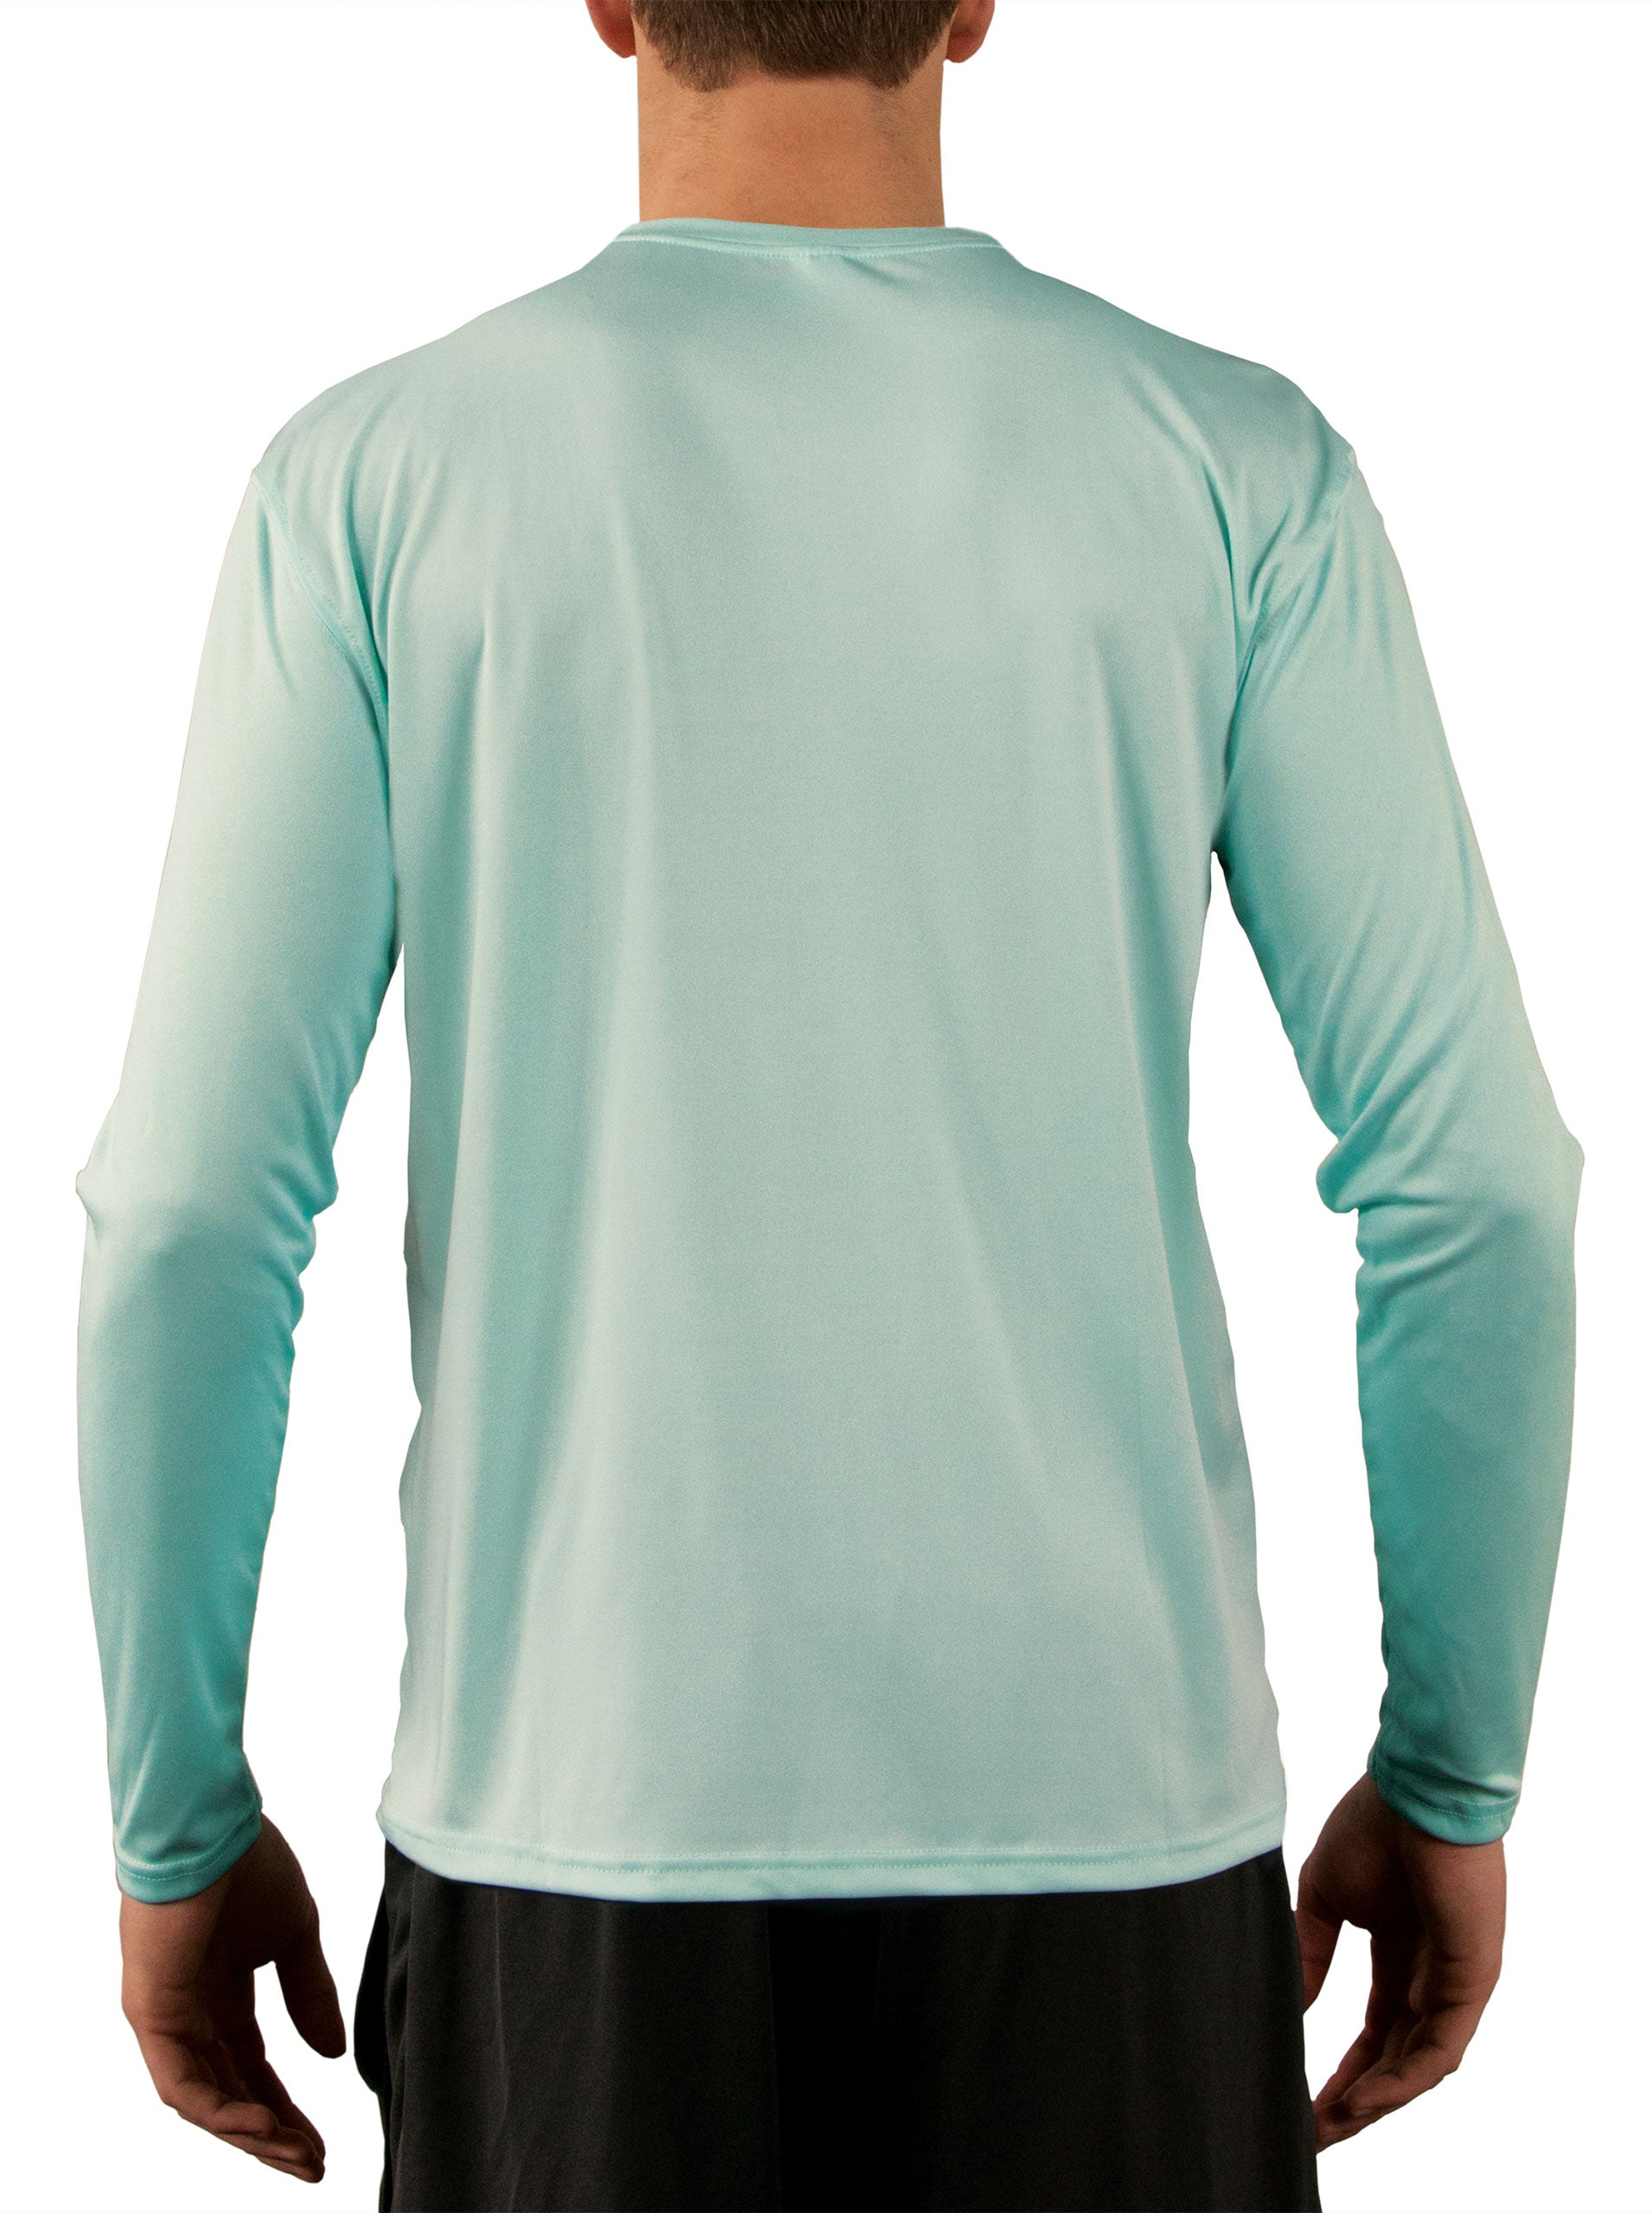 Men's Sun Shirt Lightweight Rash Guard Long Sleeve Shirts Printed